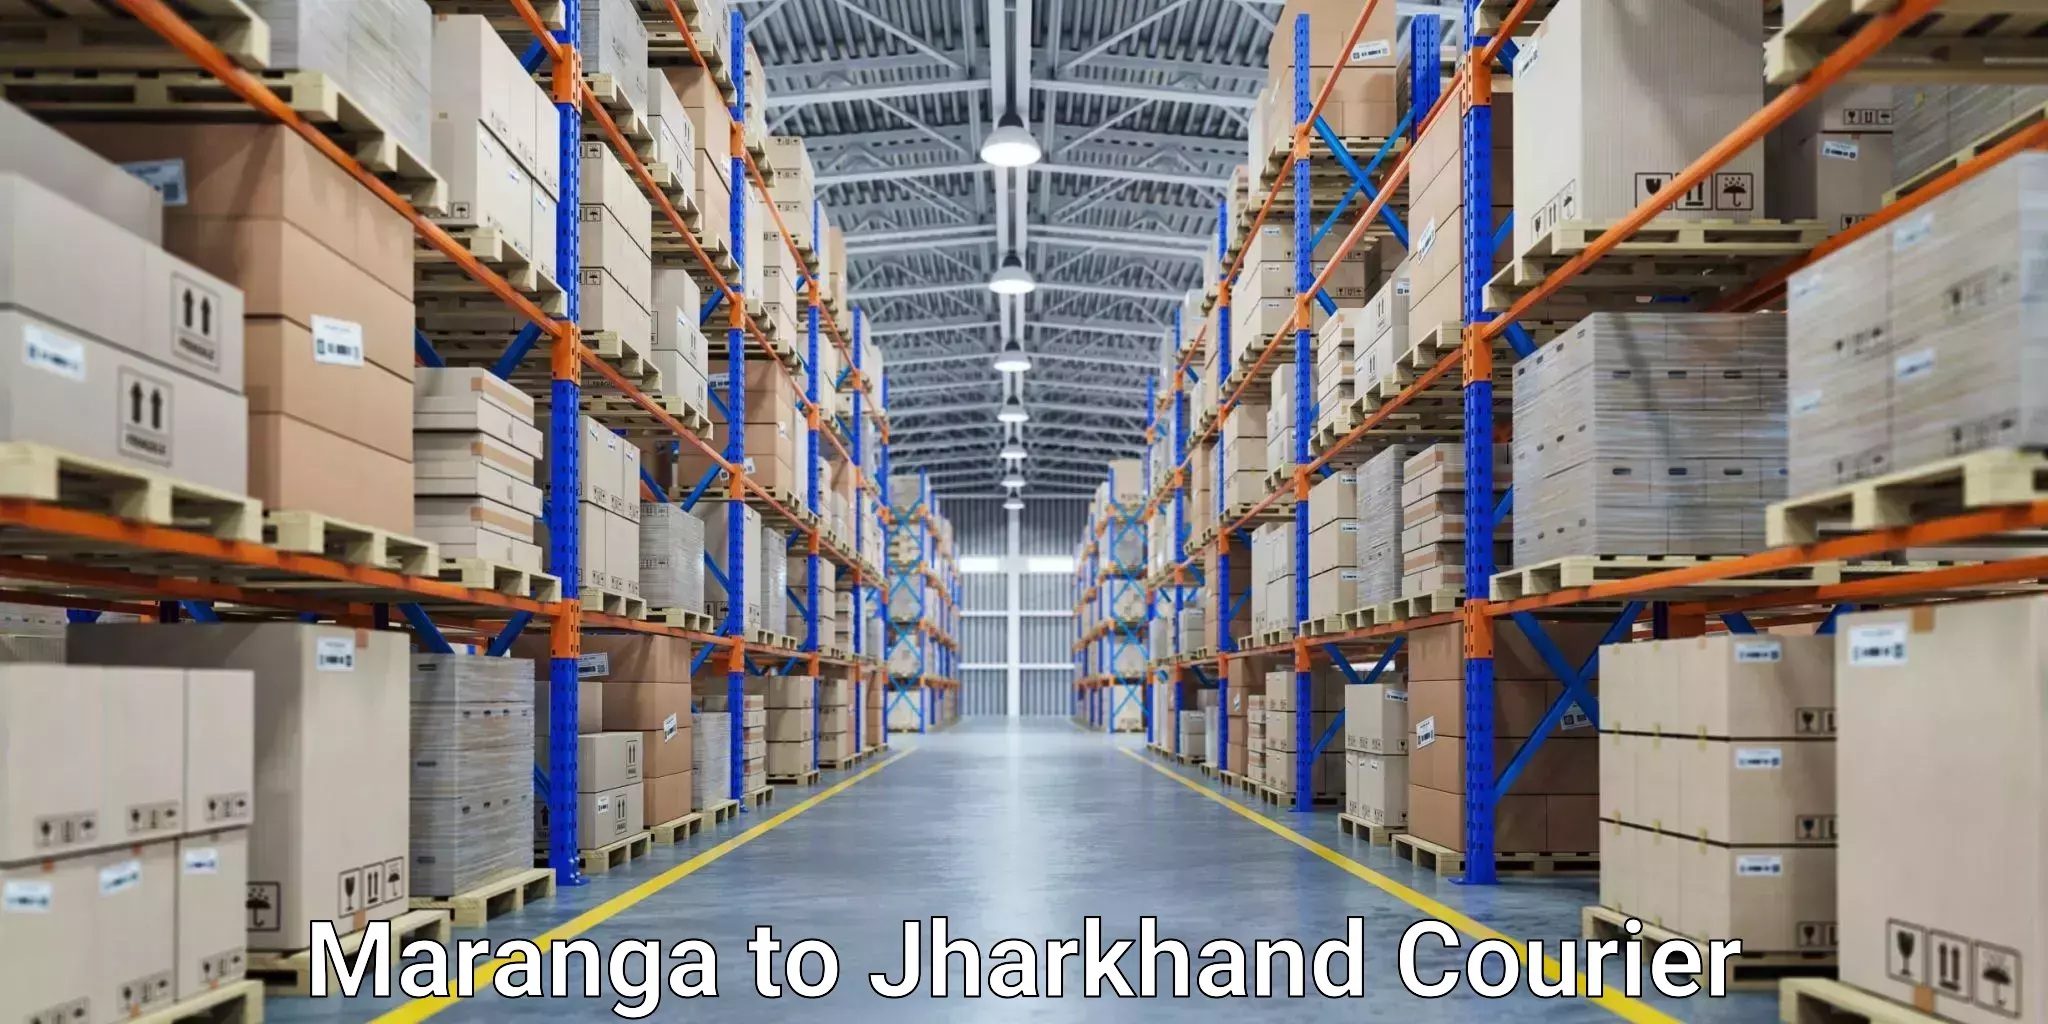 Express delivery network Maranga to Jharkhand